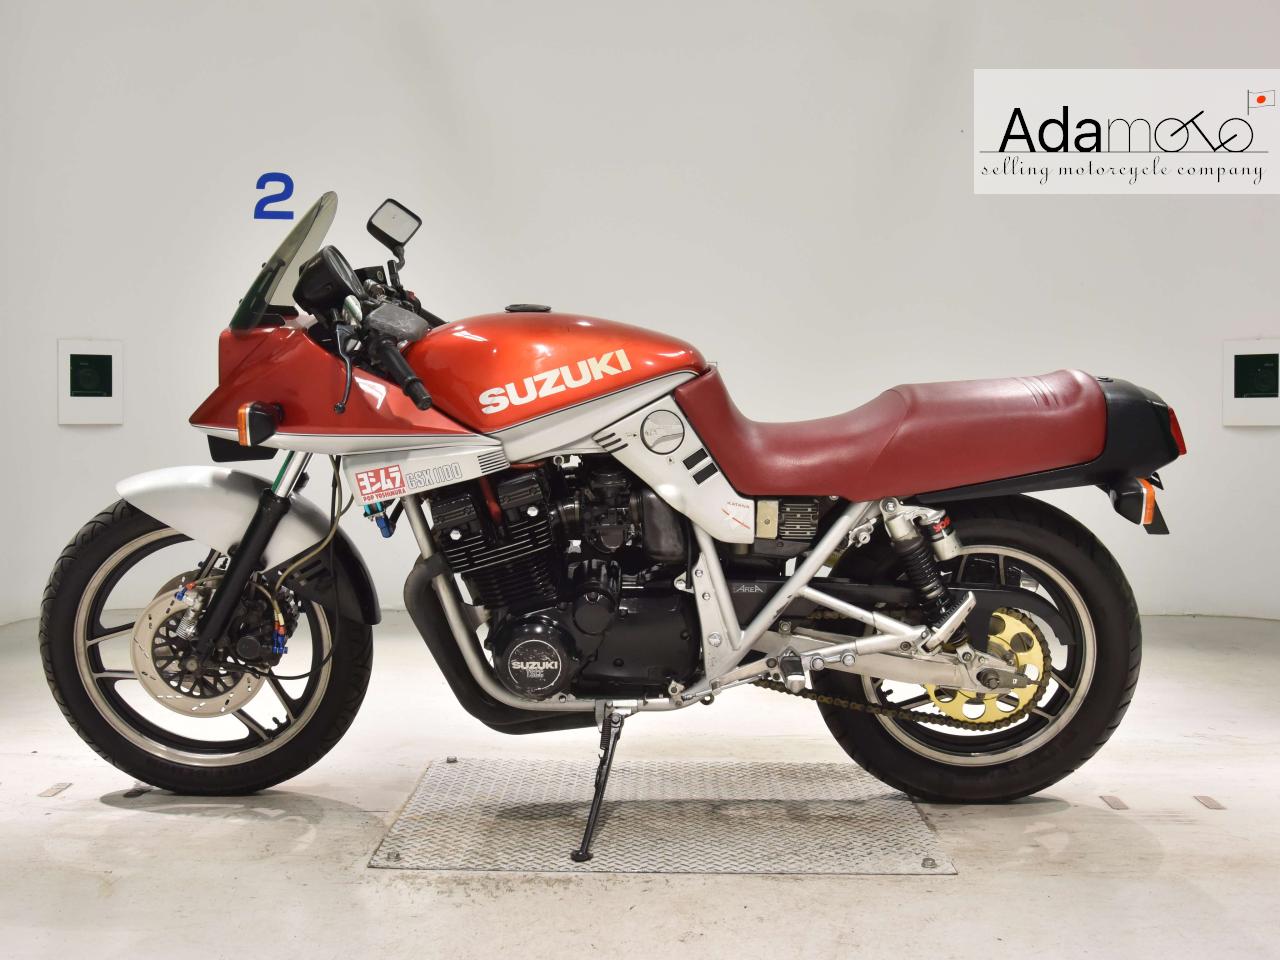 Suzuki GSX1100S KATANA - Adamoto - Motorcycles from Japan